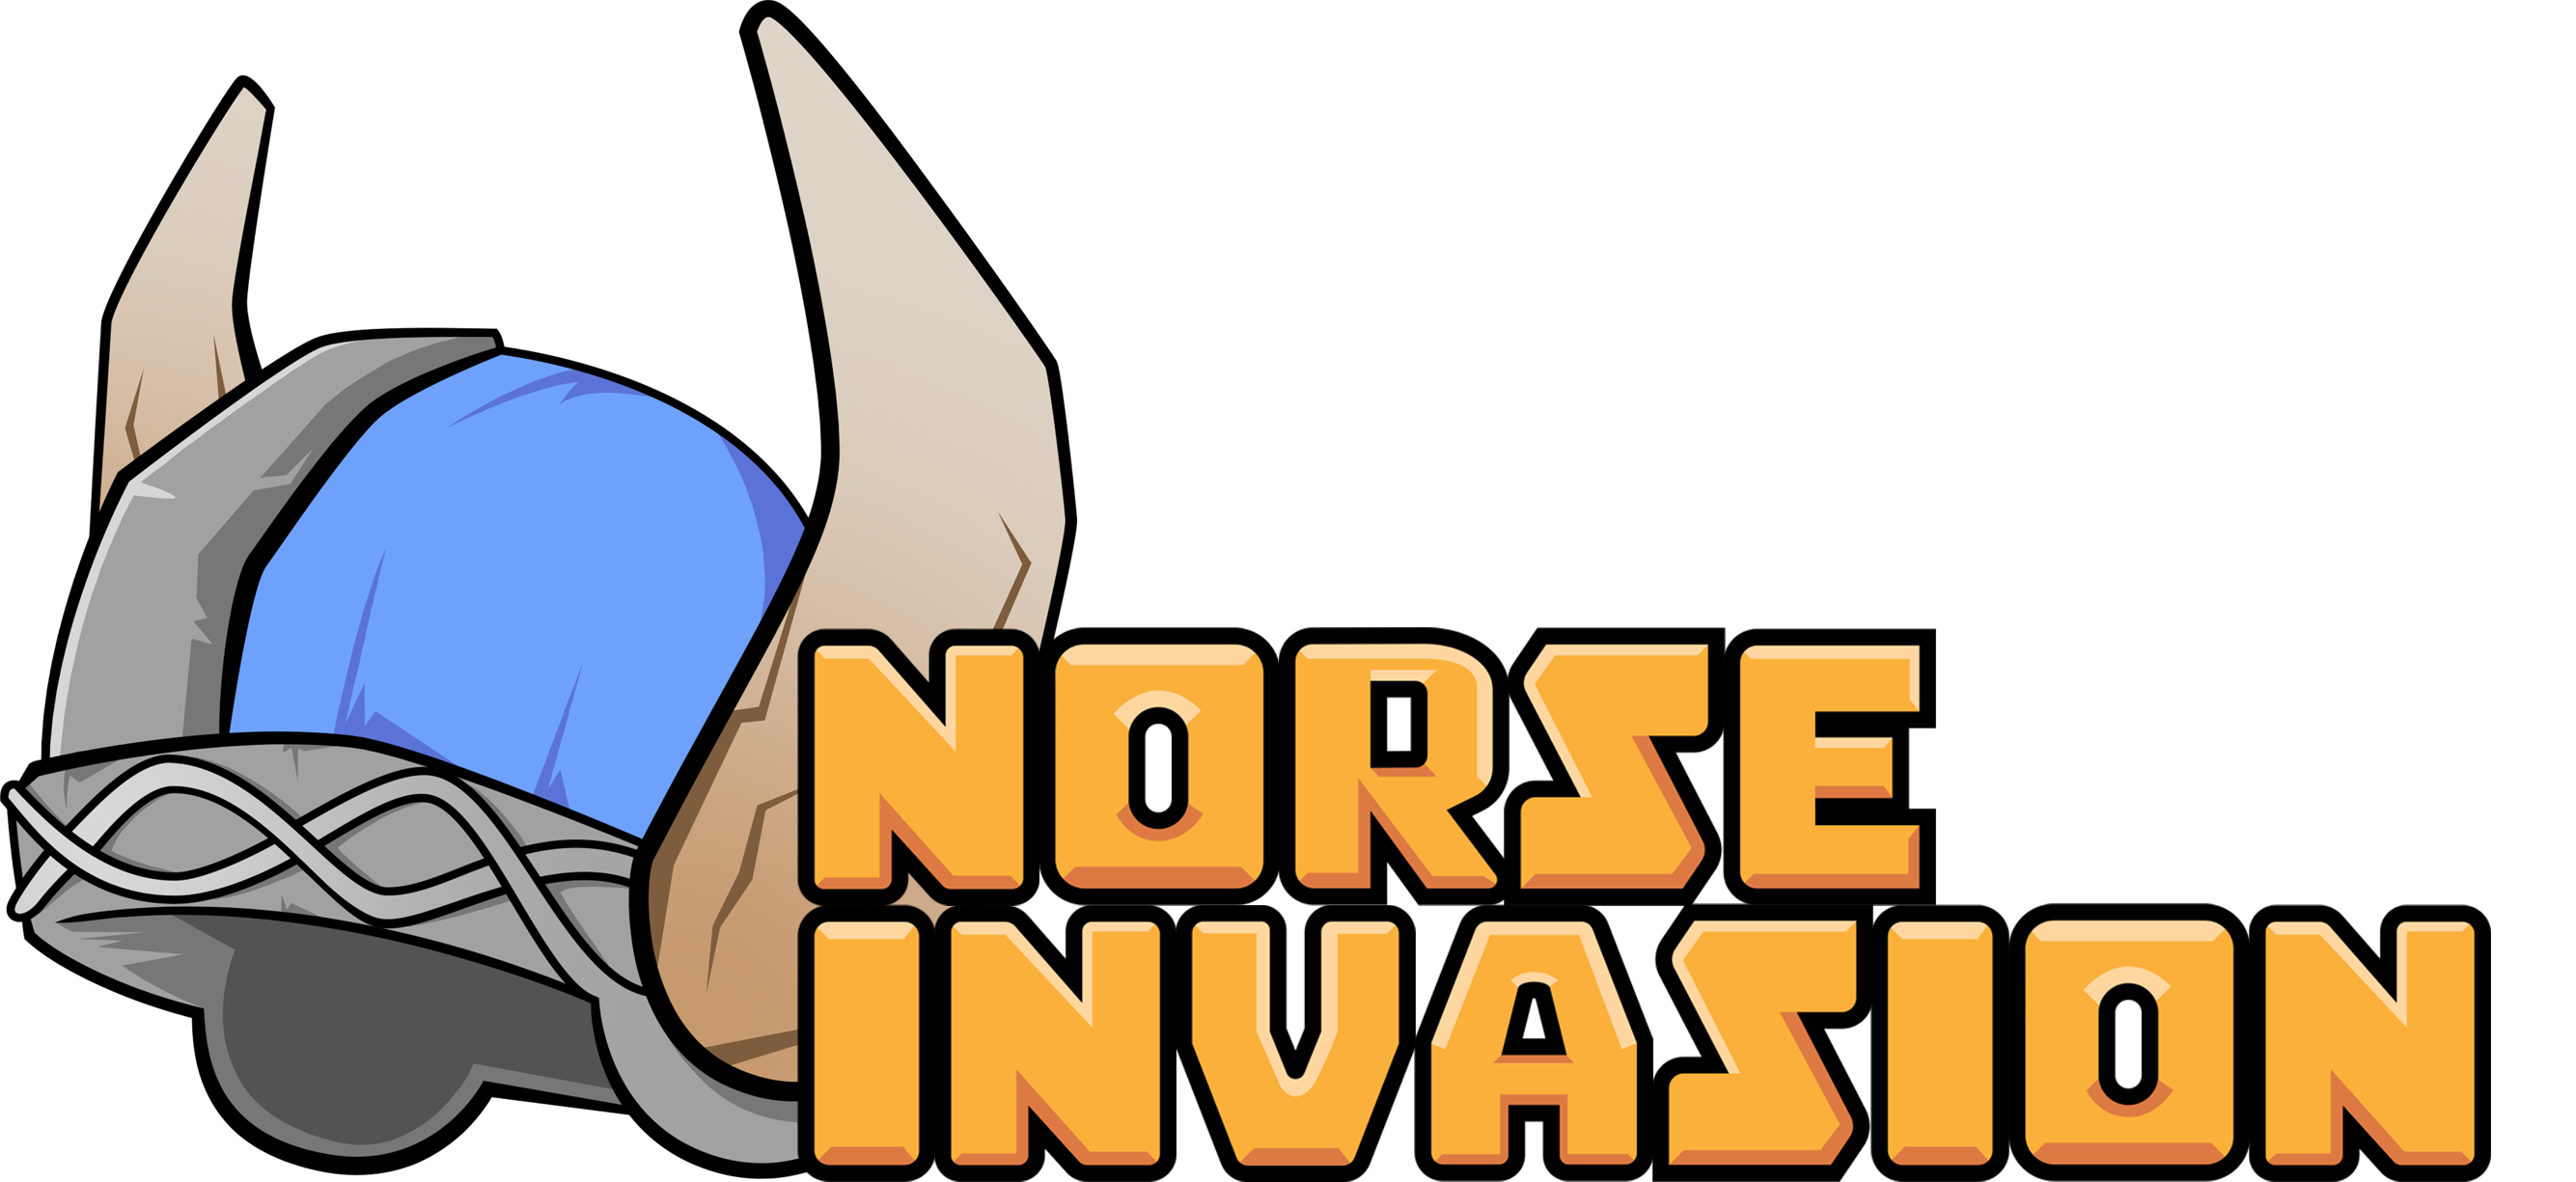 norse invasion logo